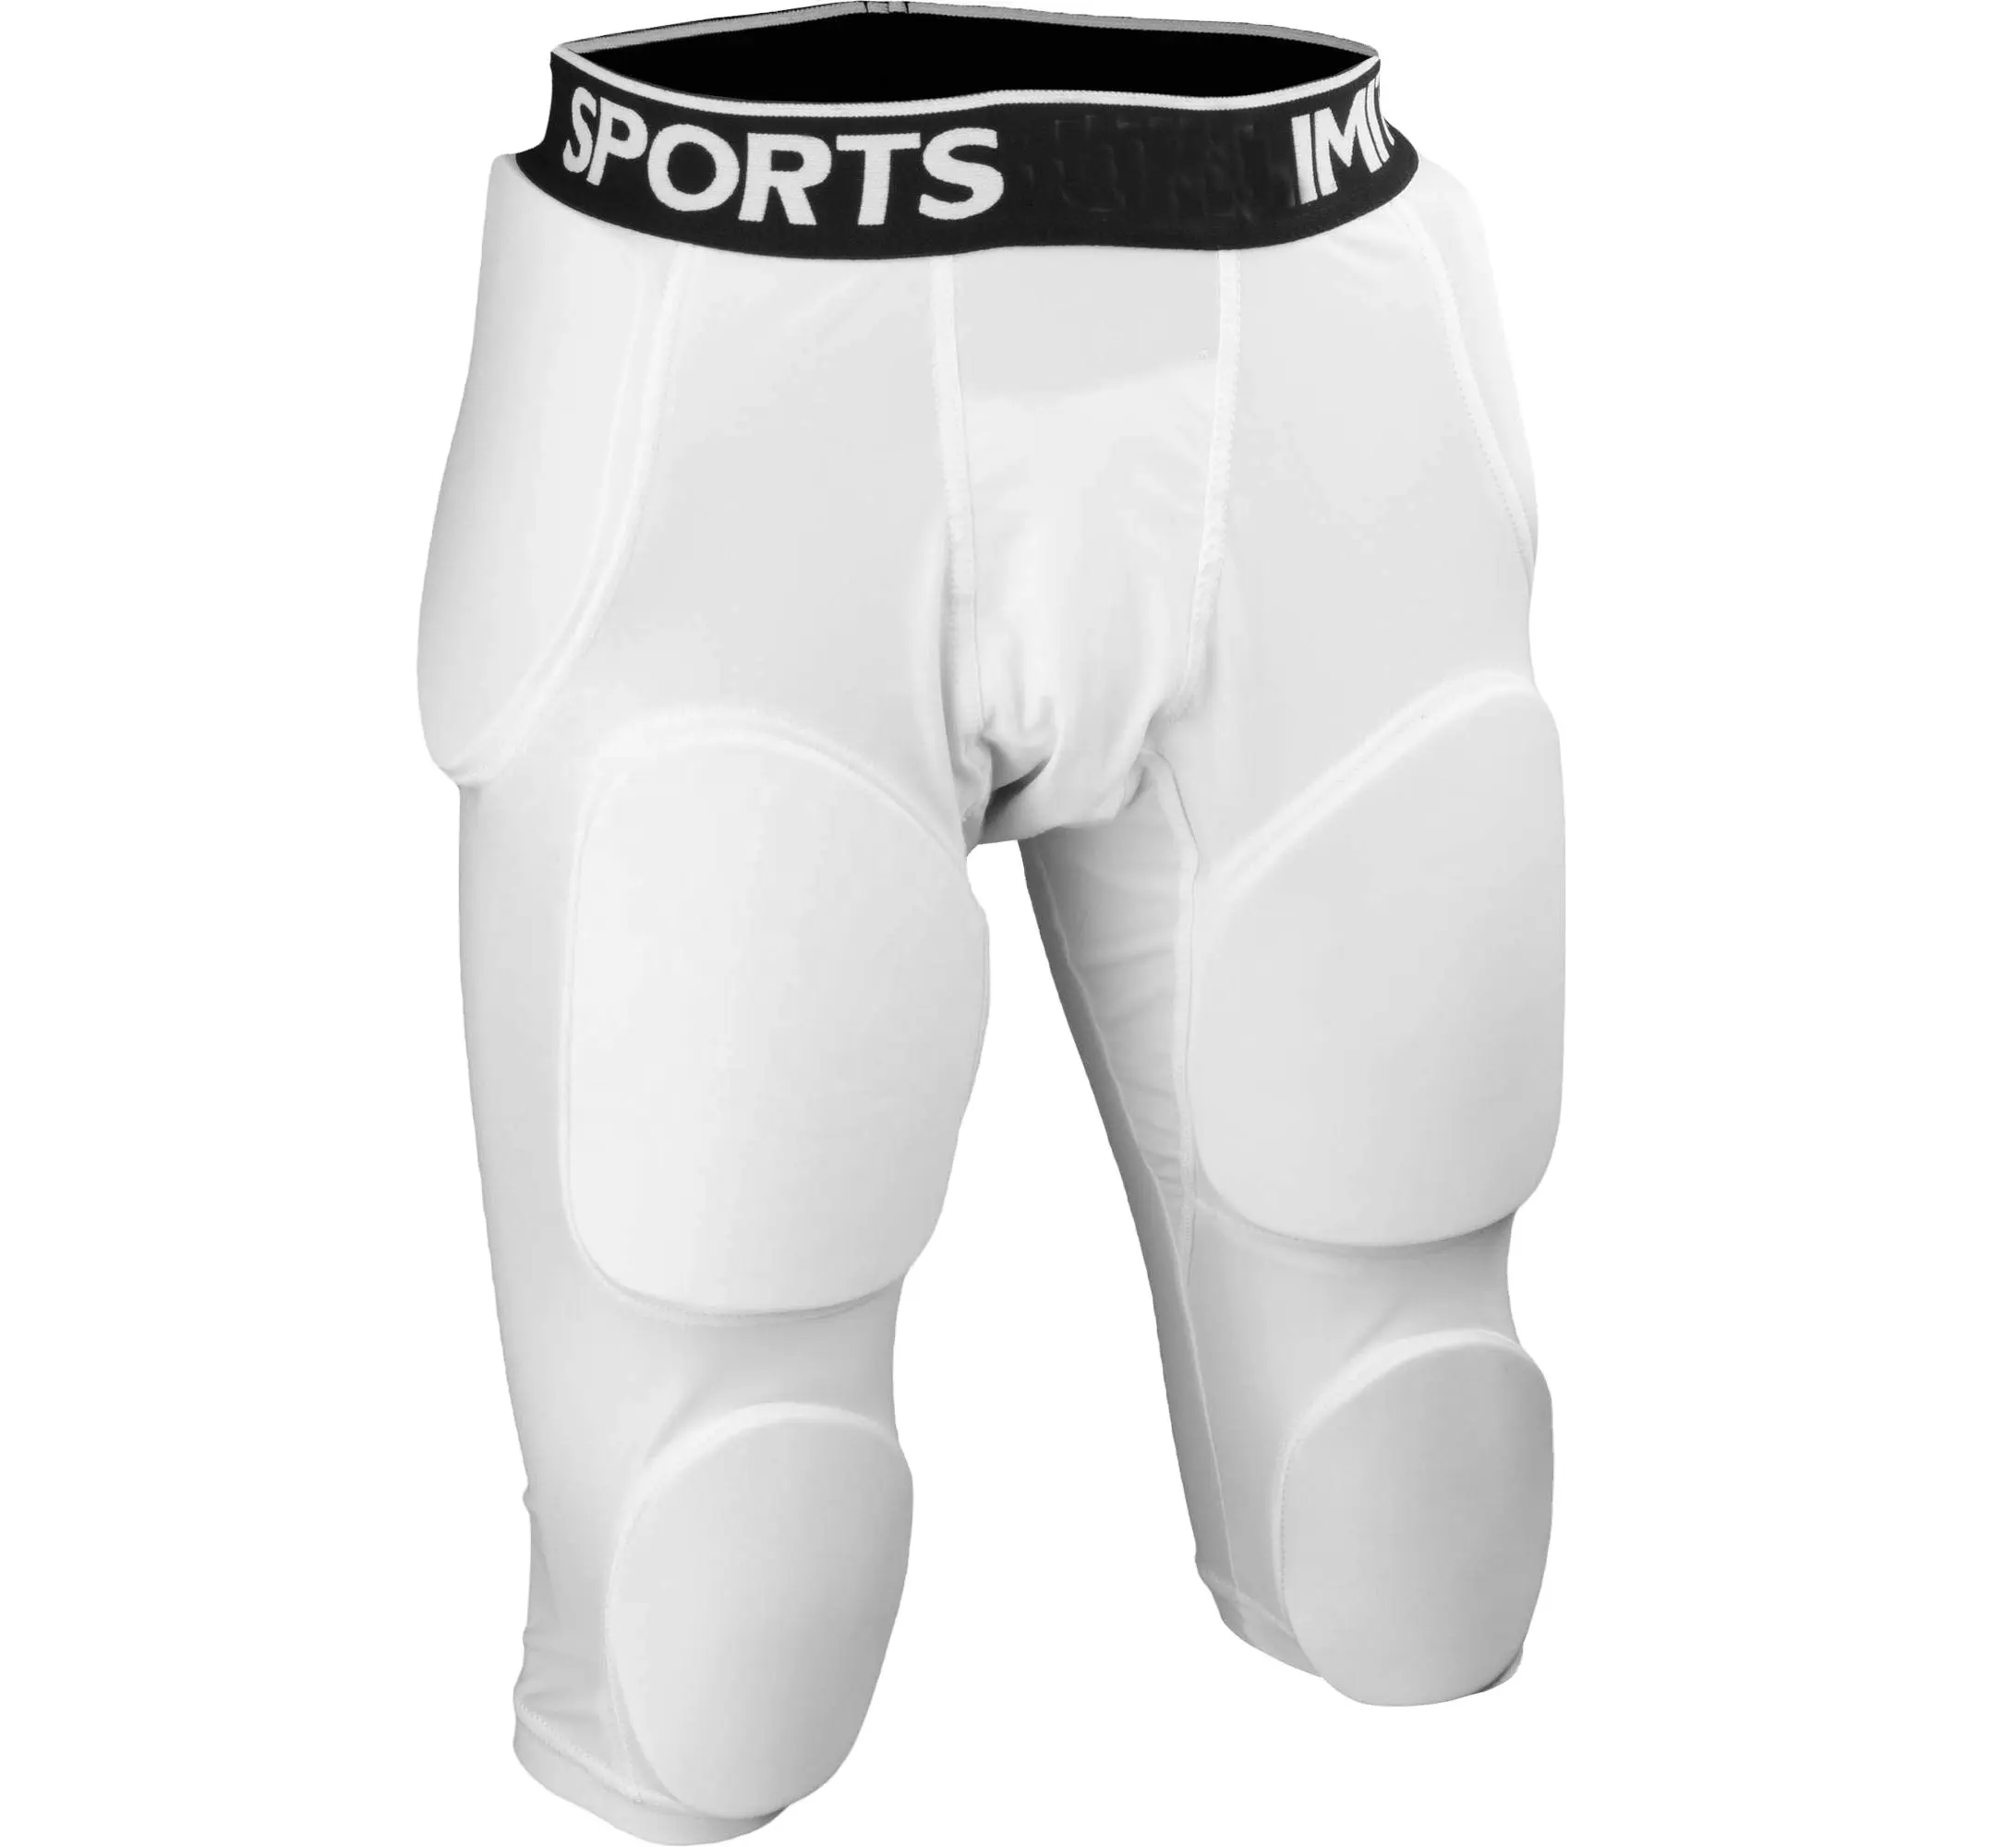 wholesales customize american football pants American football pant pads 7 Piece Leg Pads Set Man 5 Padded Football Girdle Short